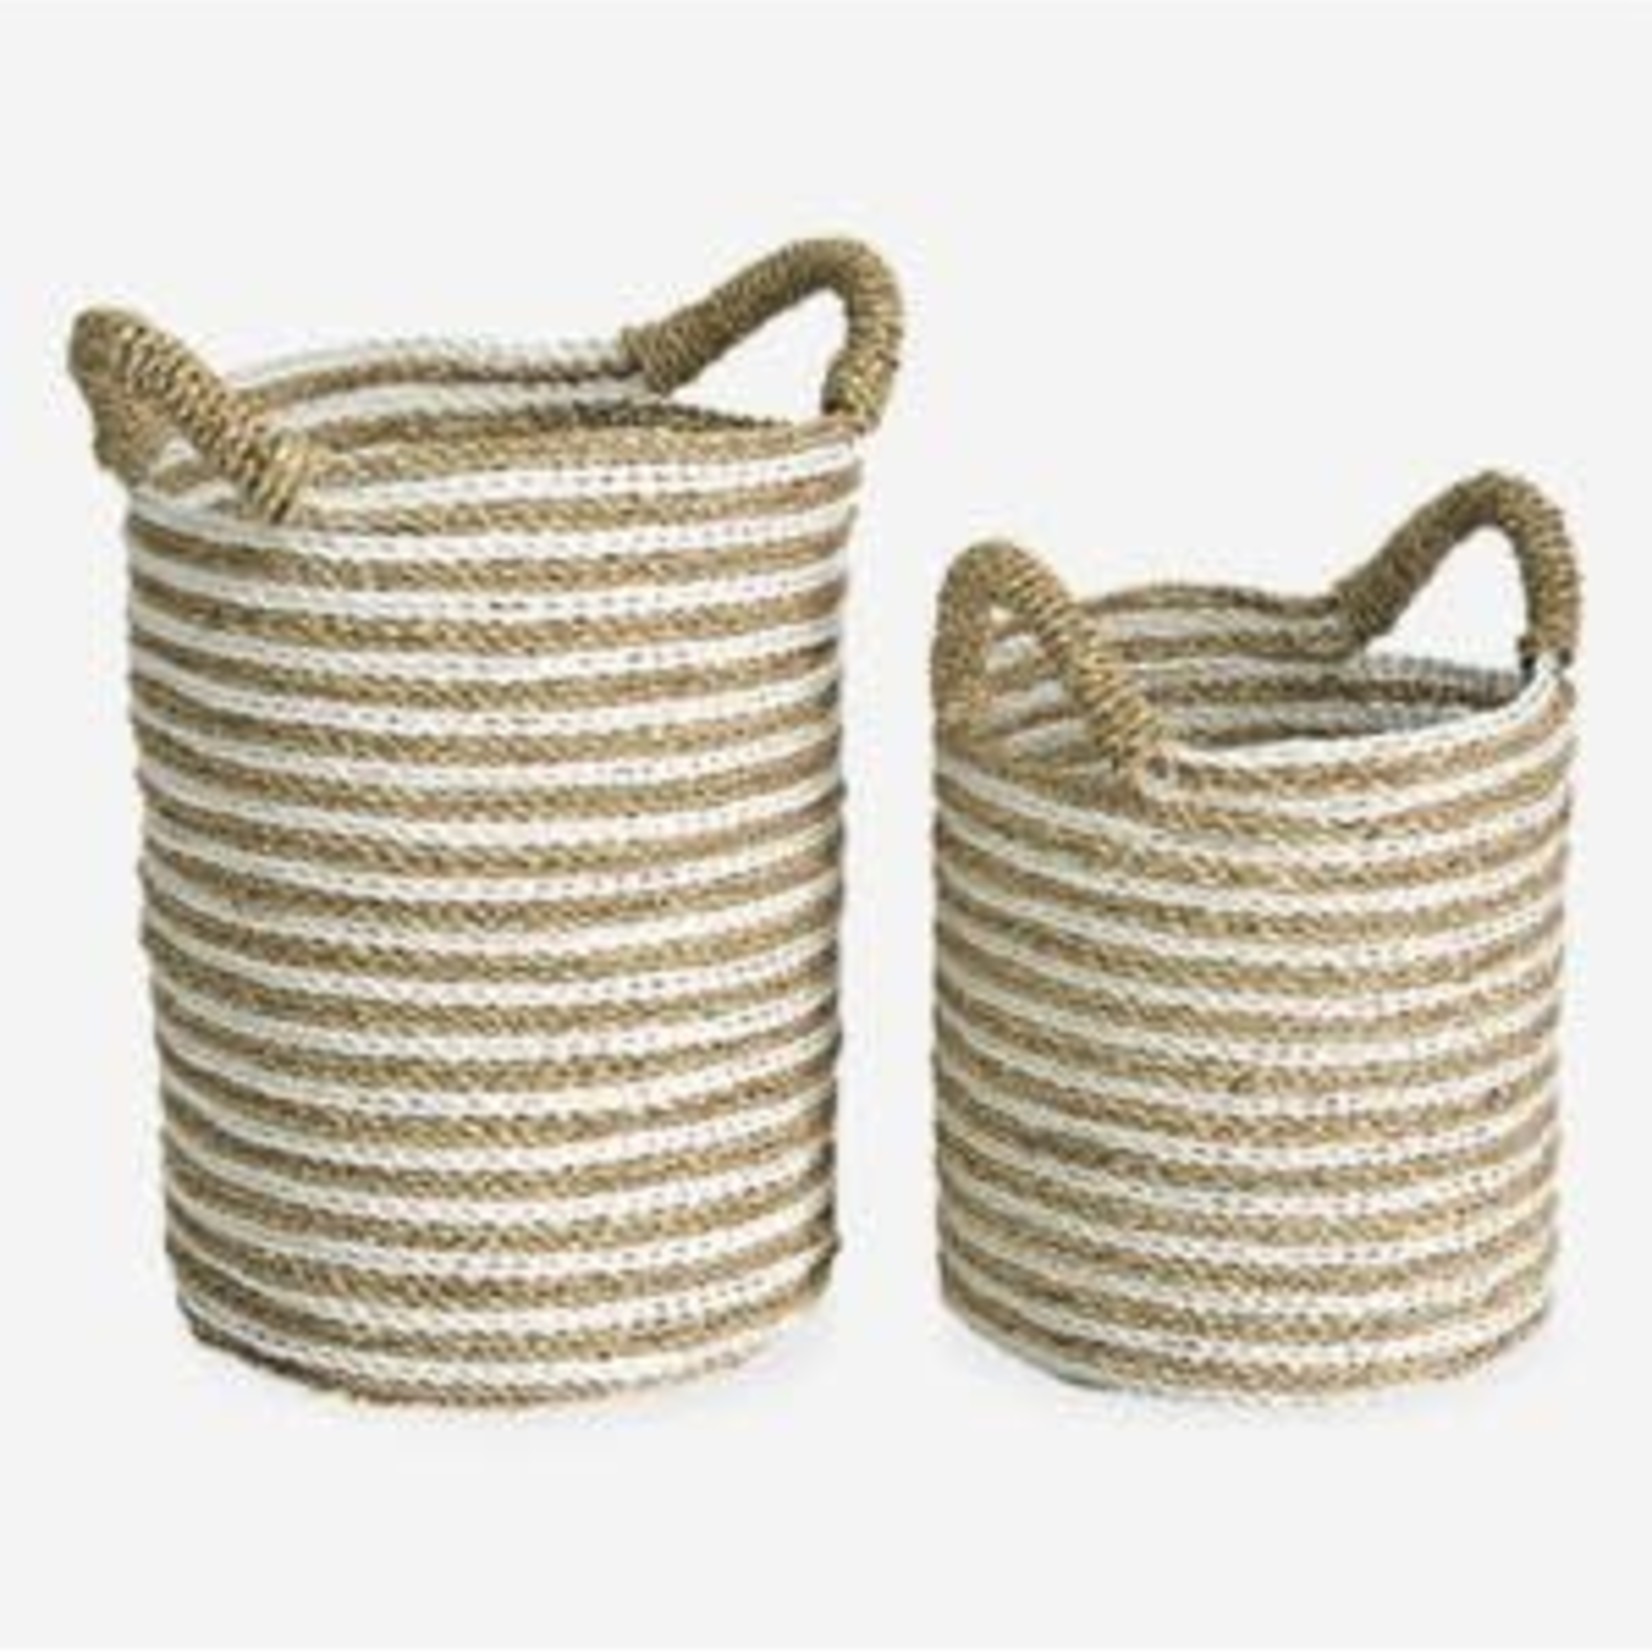 Woven Stripes Basket White & Brown Small